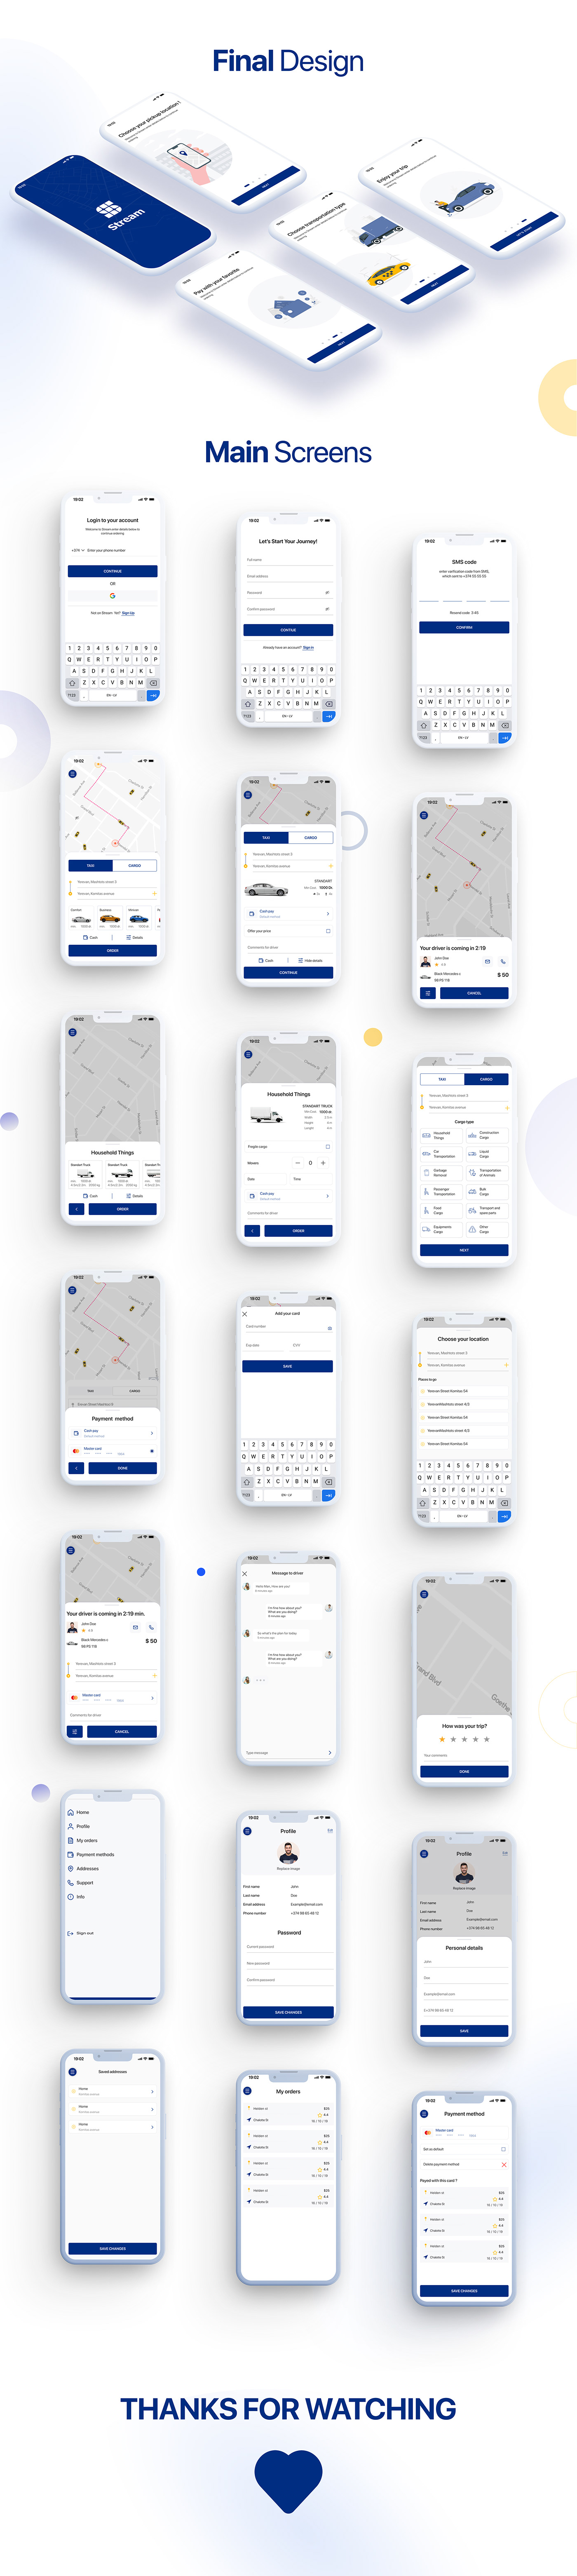 app application car Case Study design mobile taxi transportation UI/UX ux